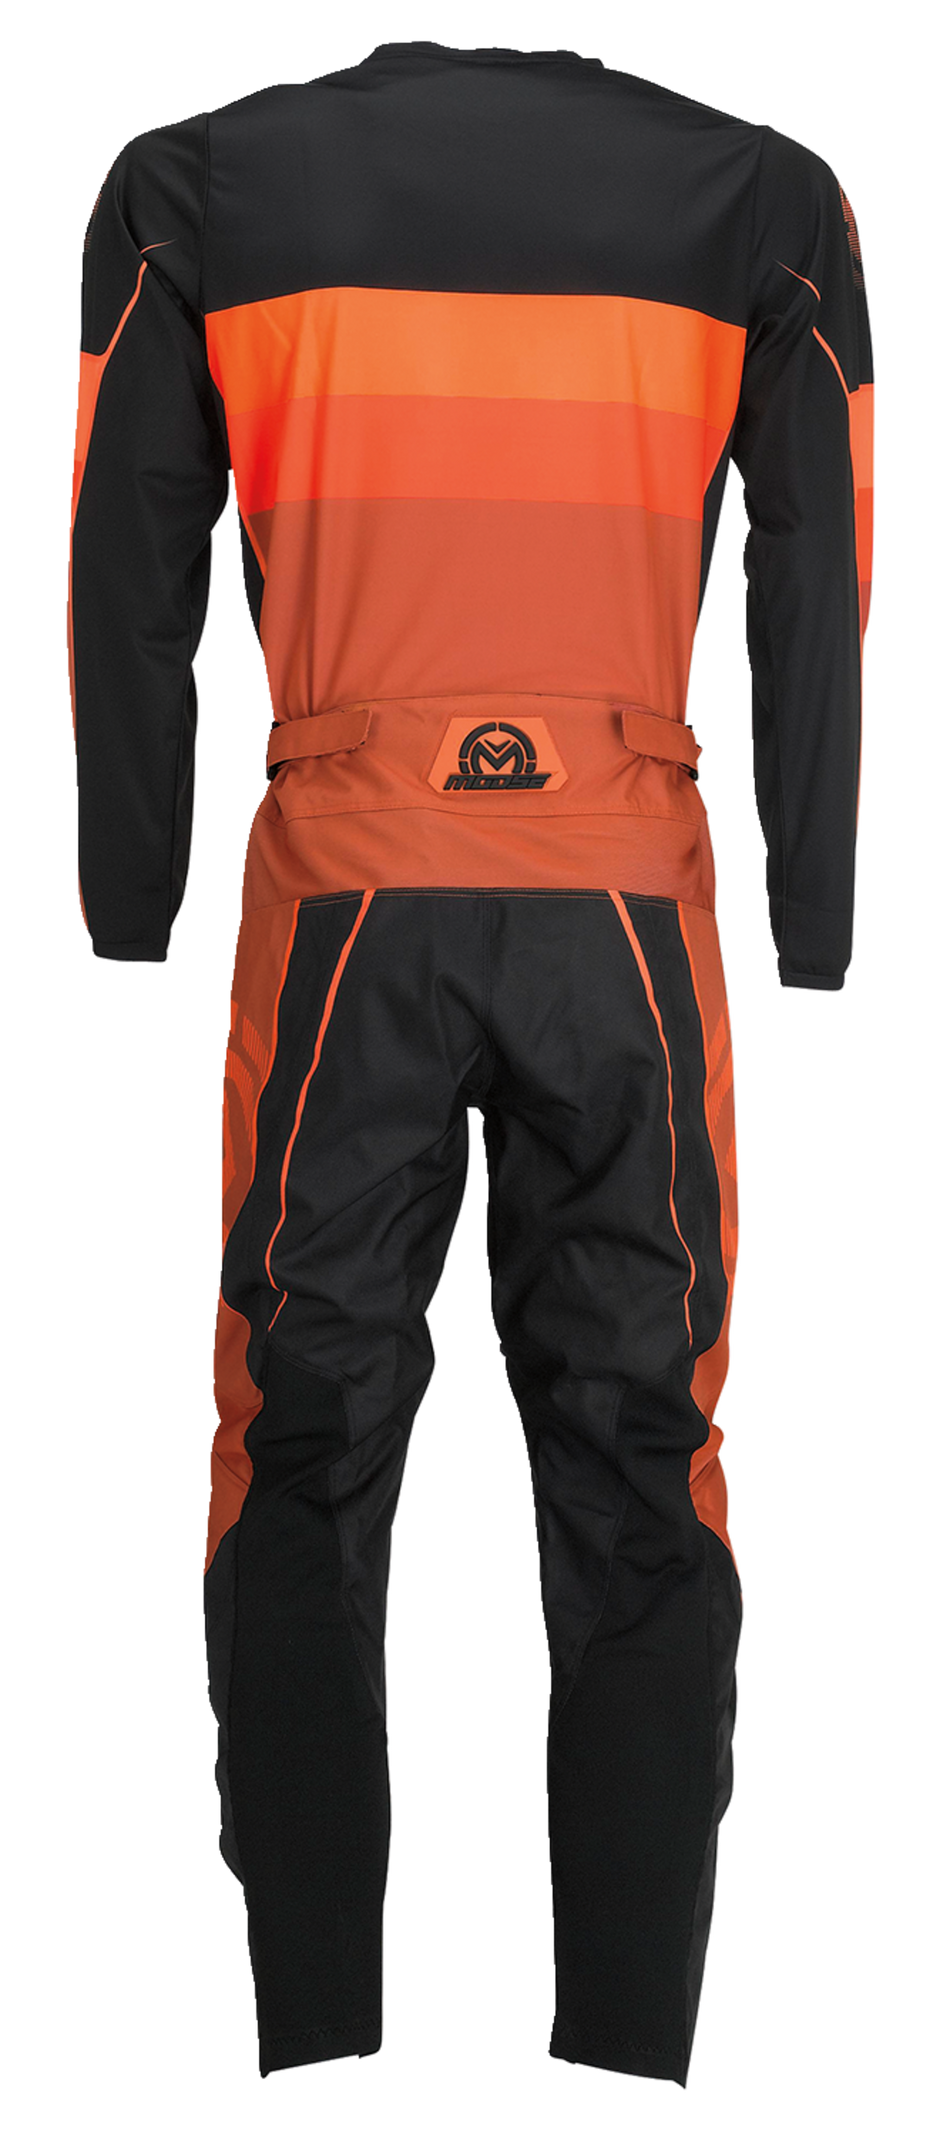 MOOSE RACING Qualifier® Jersey - Orange/Gray - Small 2910-7196